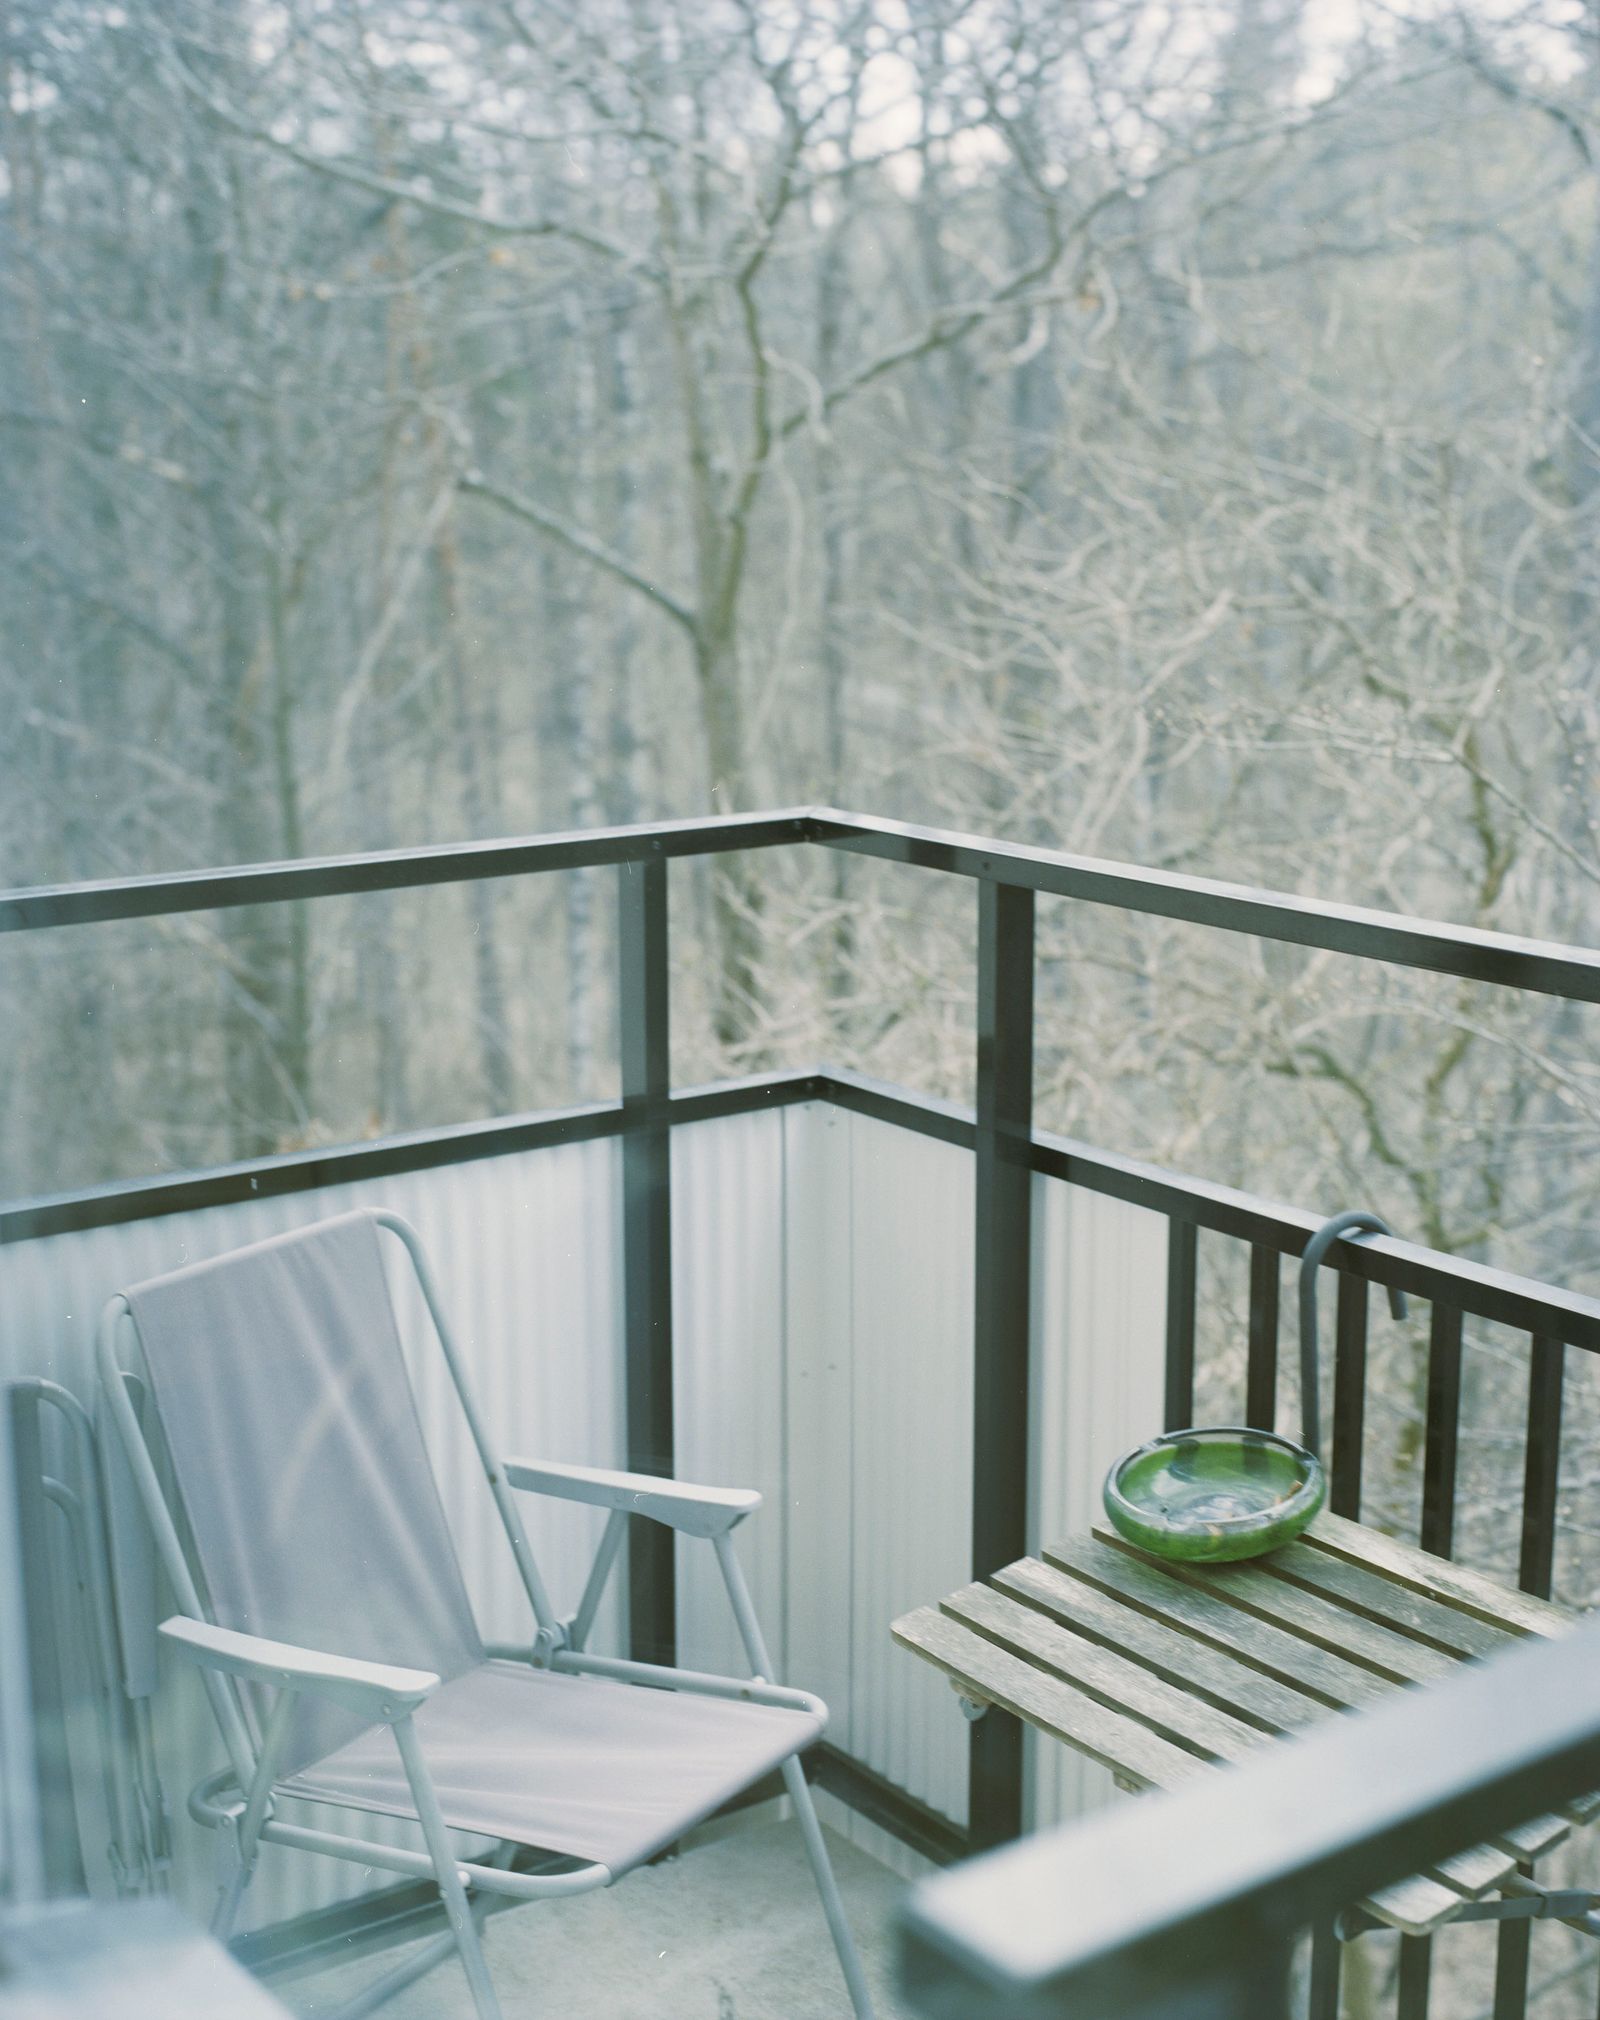 © Elsa Gregersdotter - The balcony